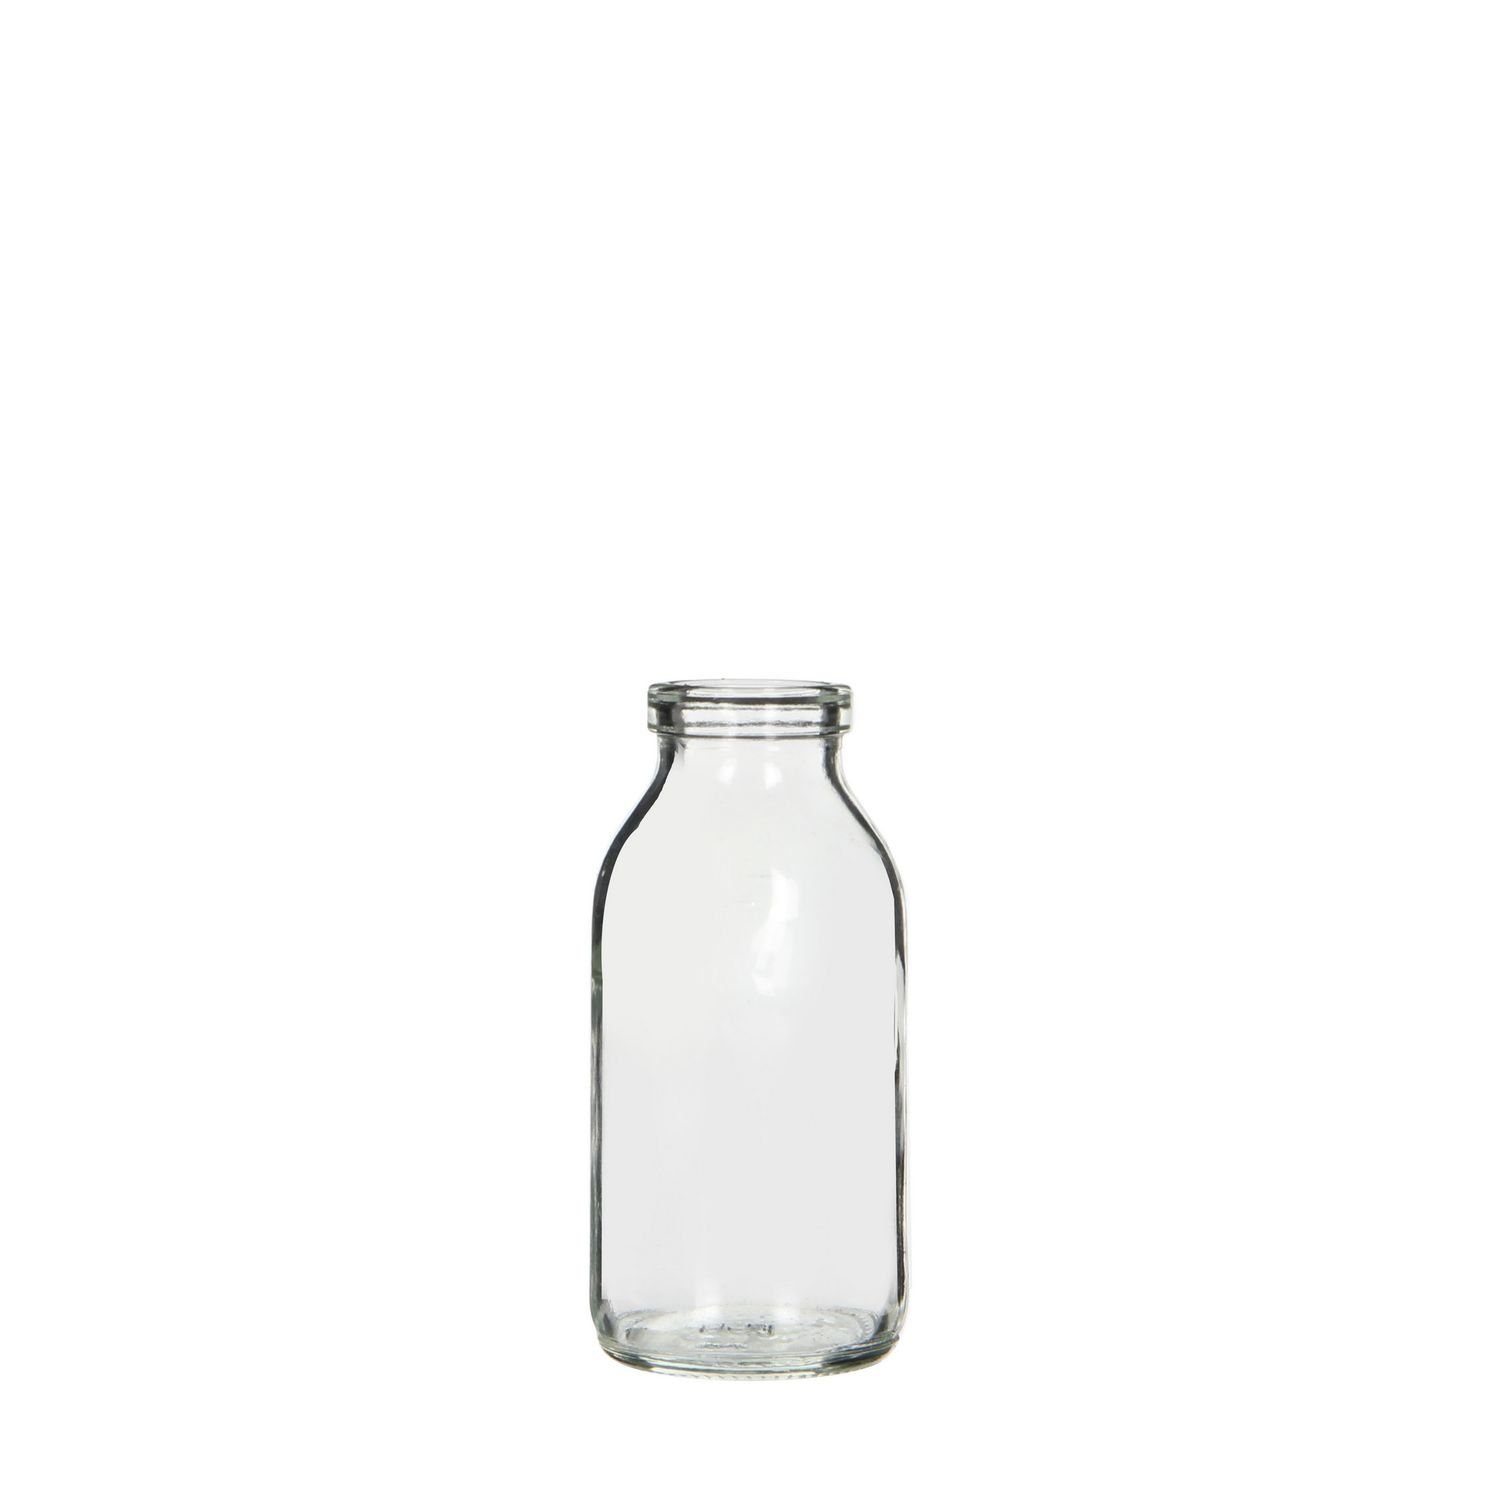 NaDeco Dekovase Glasfläschchen, 32 ca. 10,5x4,8cm Stück, Maße